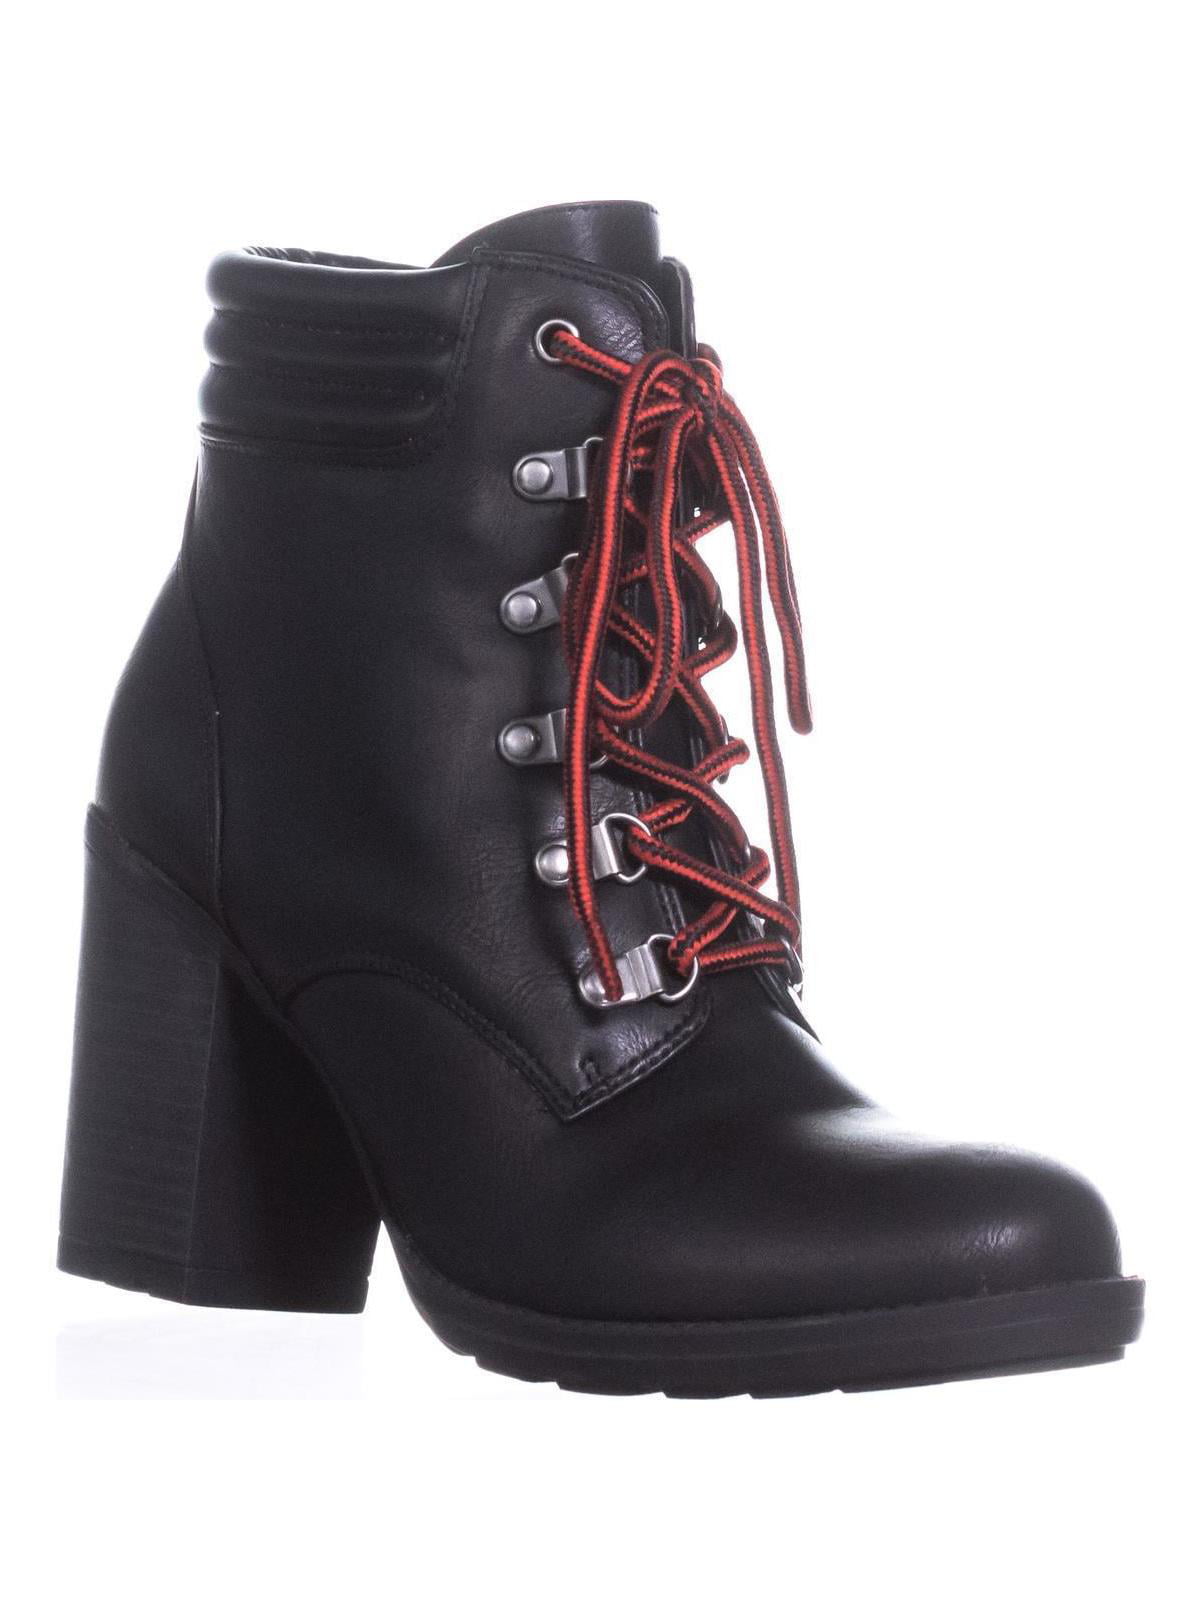 Womens ESPRIT Halona Heeled Combat Boots, Black, 9 US - Walmart.com